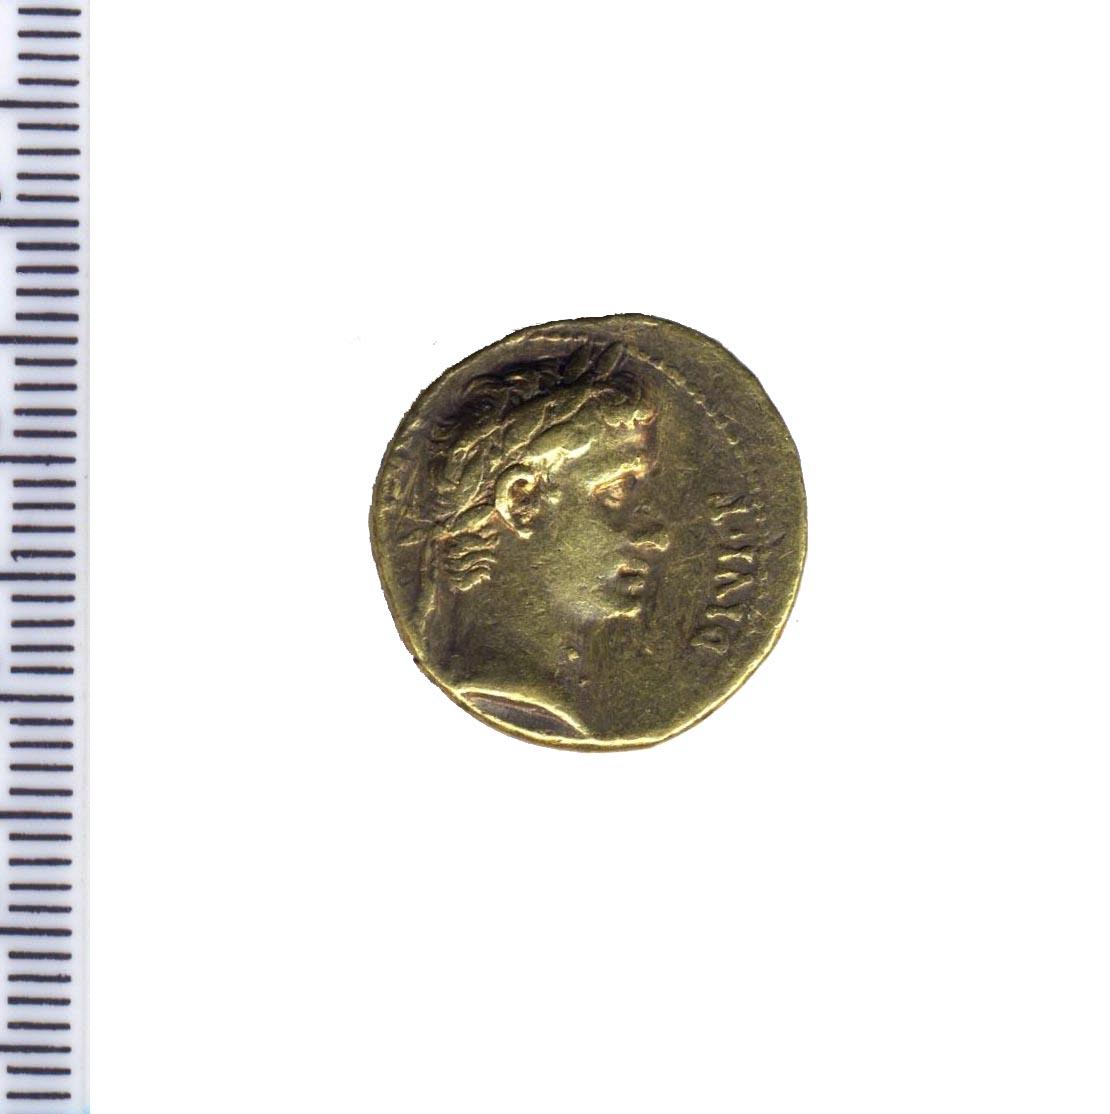 moneta - aureo - produzione romana imperiale (sec. I a.C)